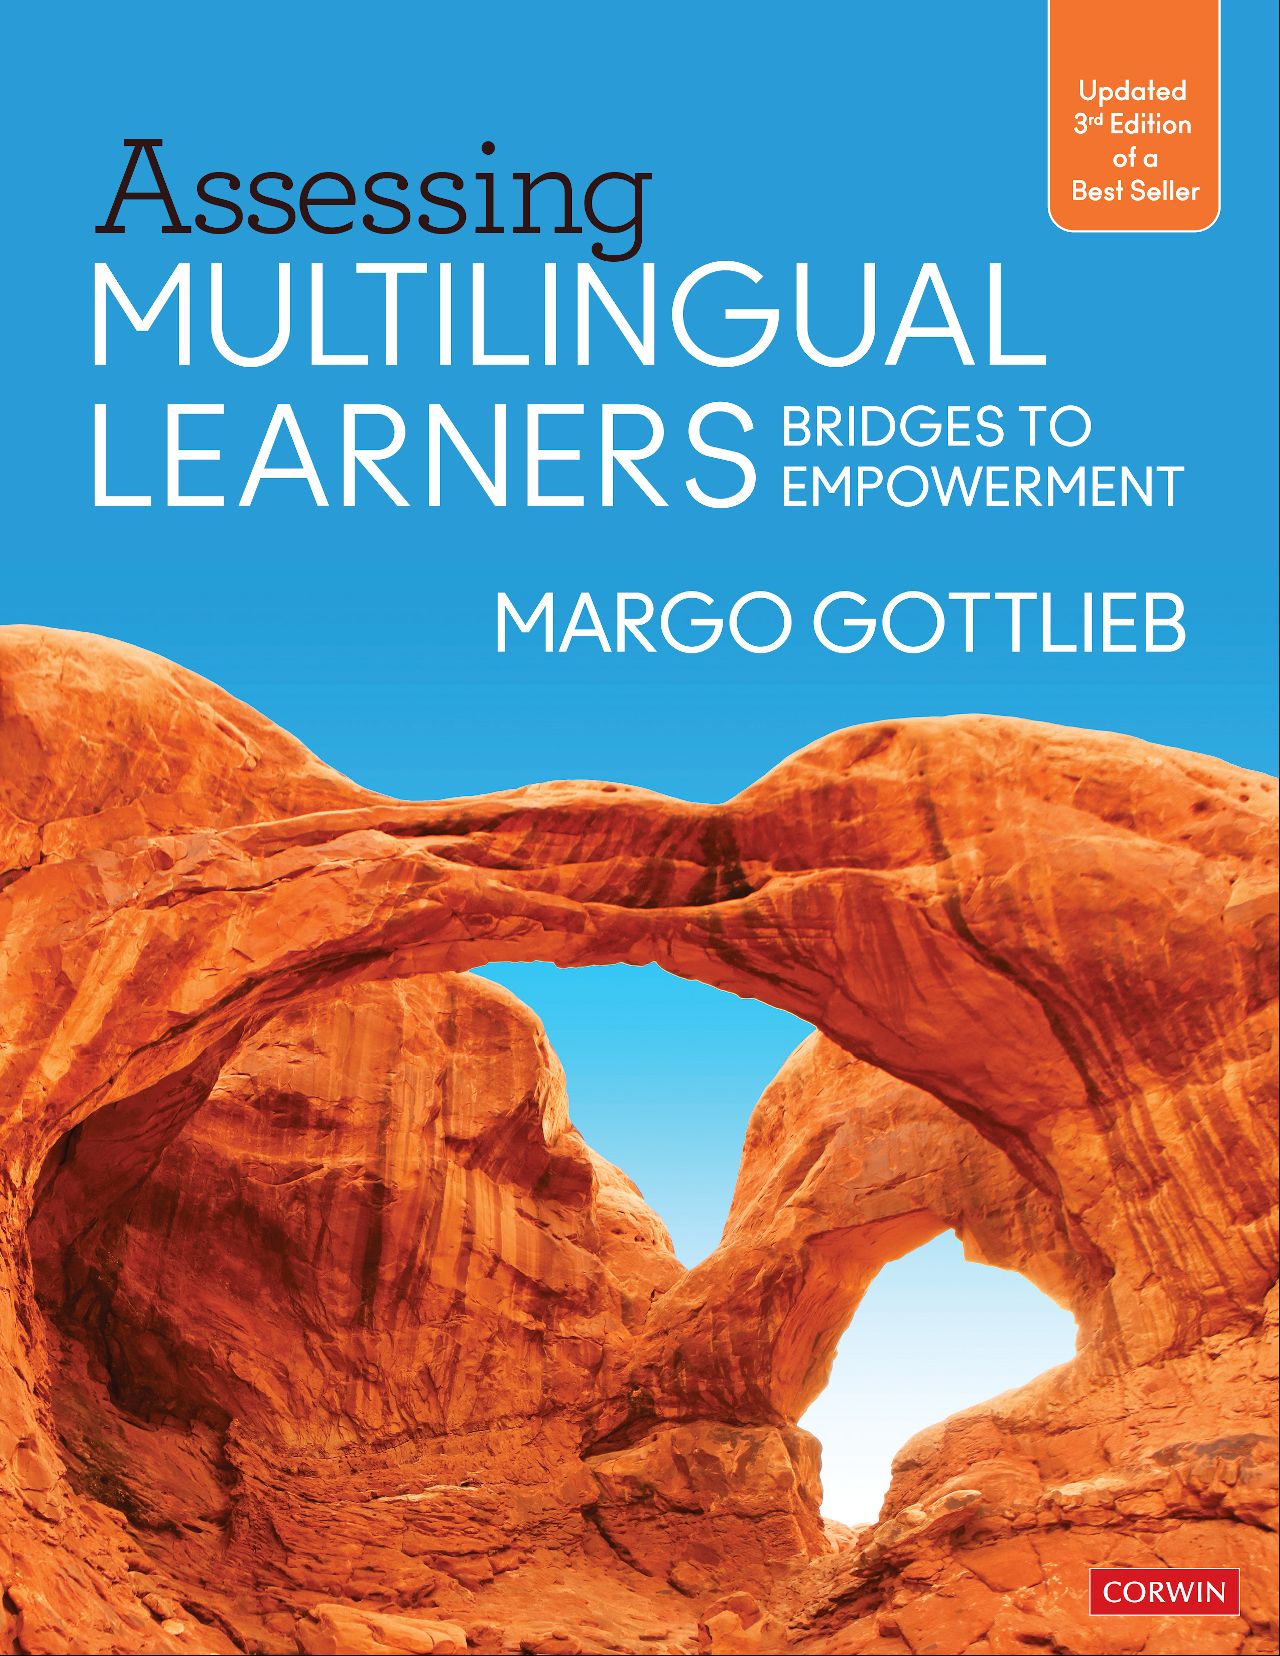 [PDF/ePub] Assessing Multilingual Learners